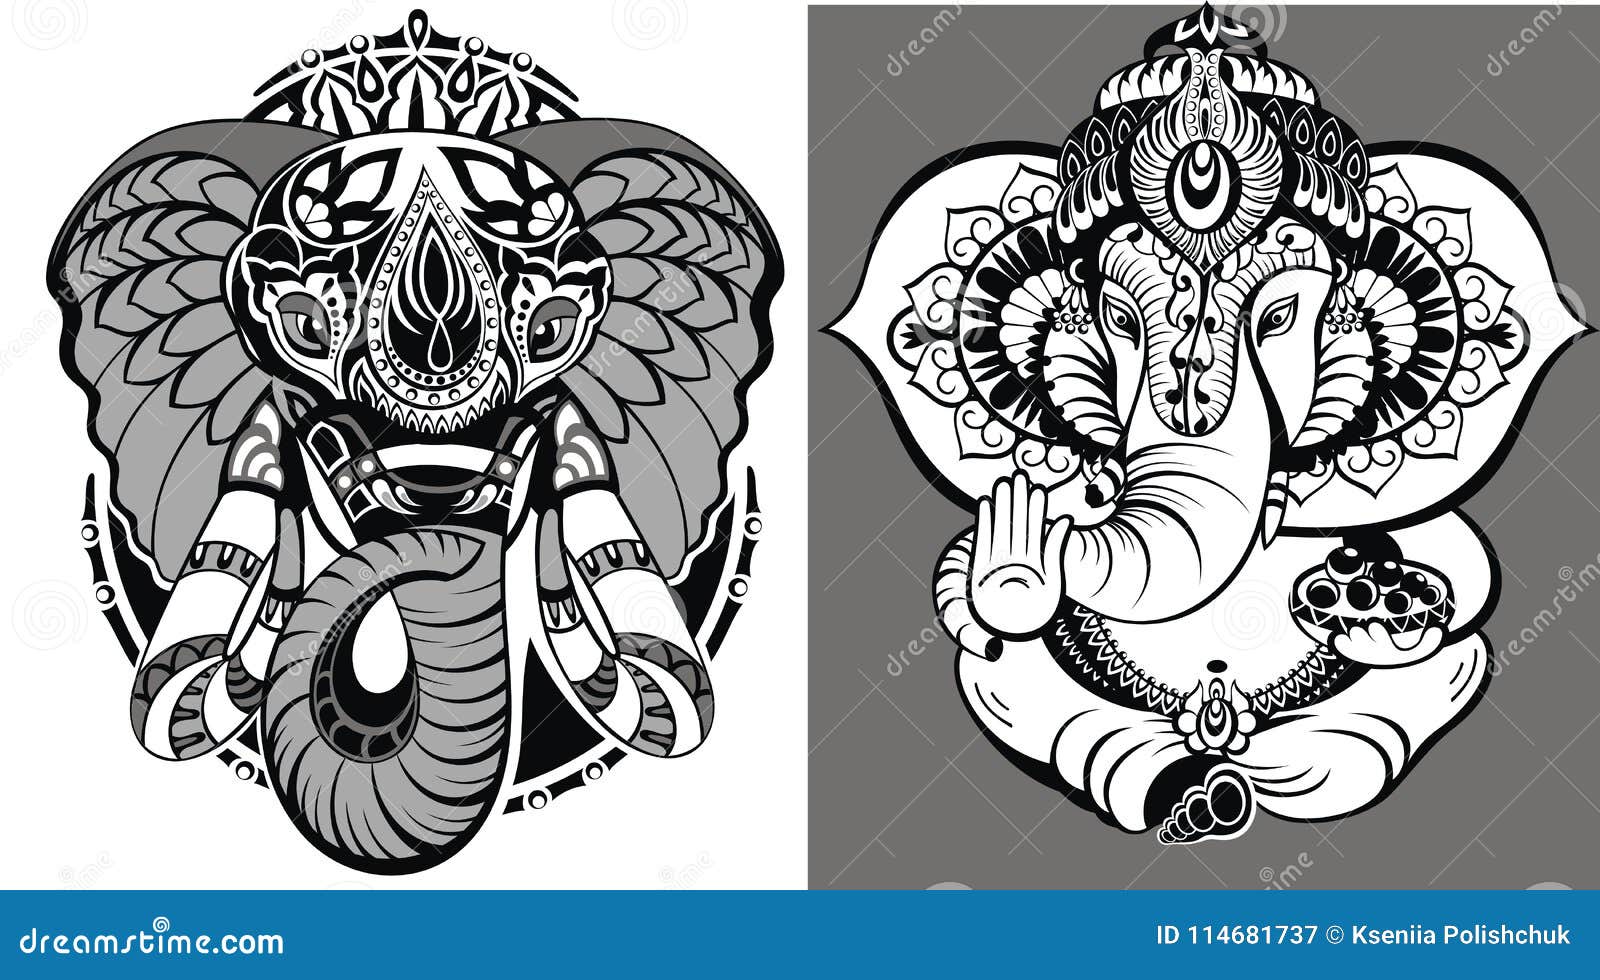 hindu elephant. lord ganesha